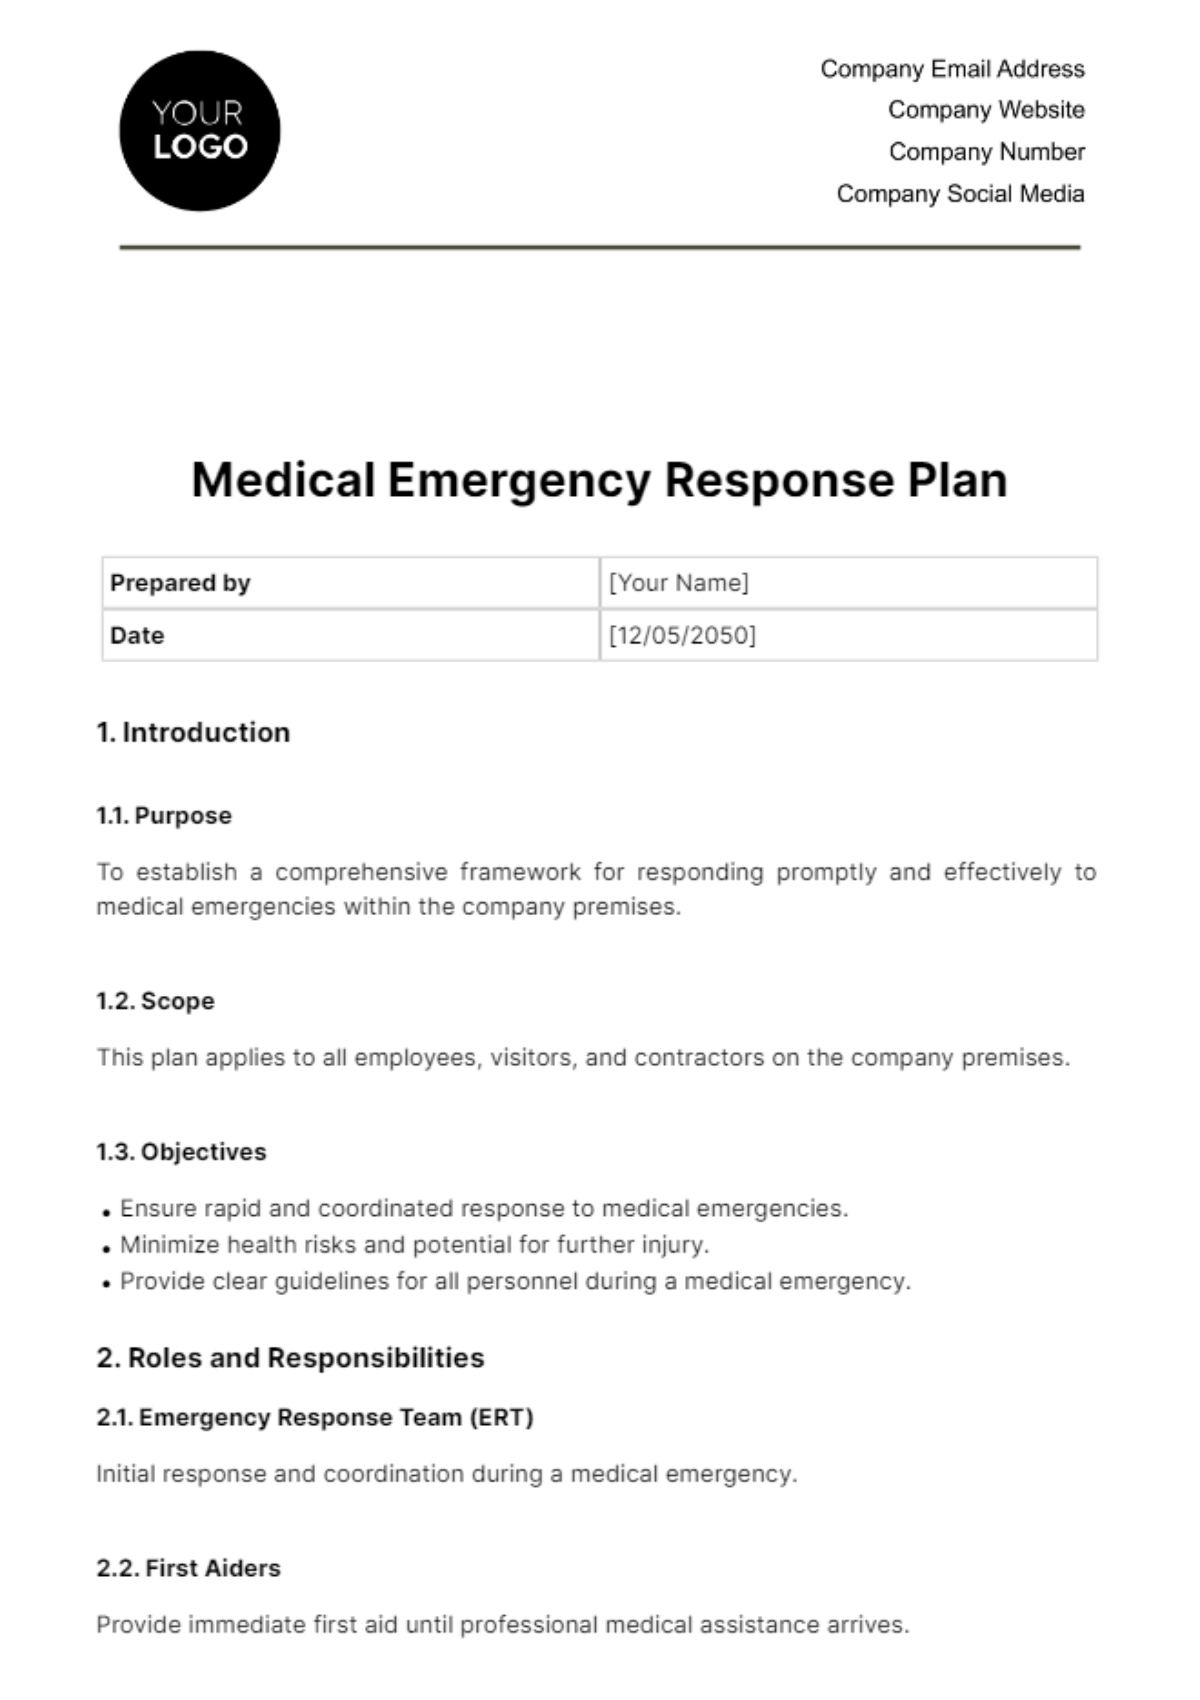 Medical Emergency Response Plan Template